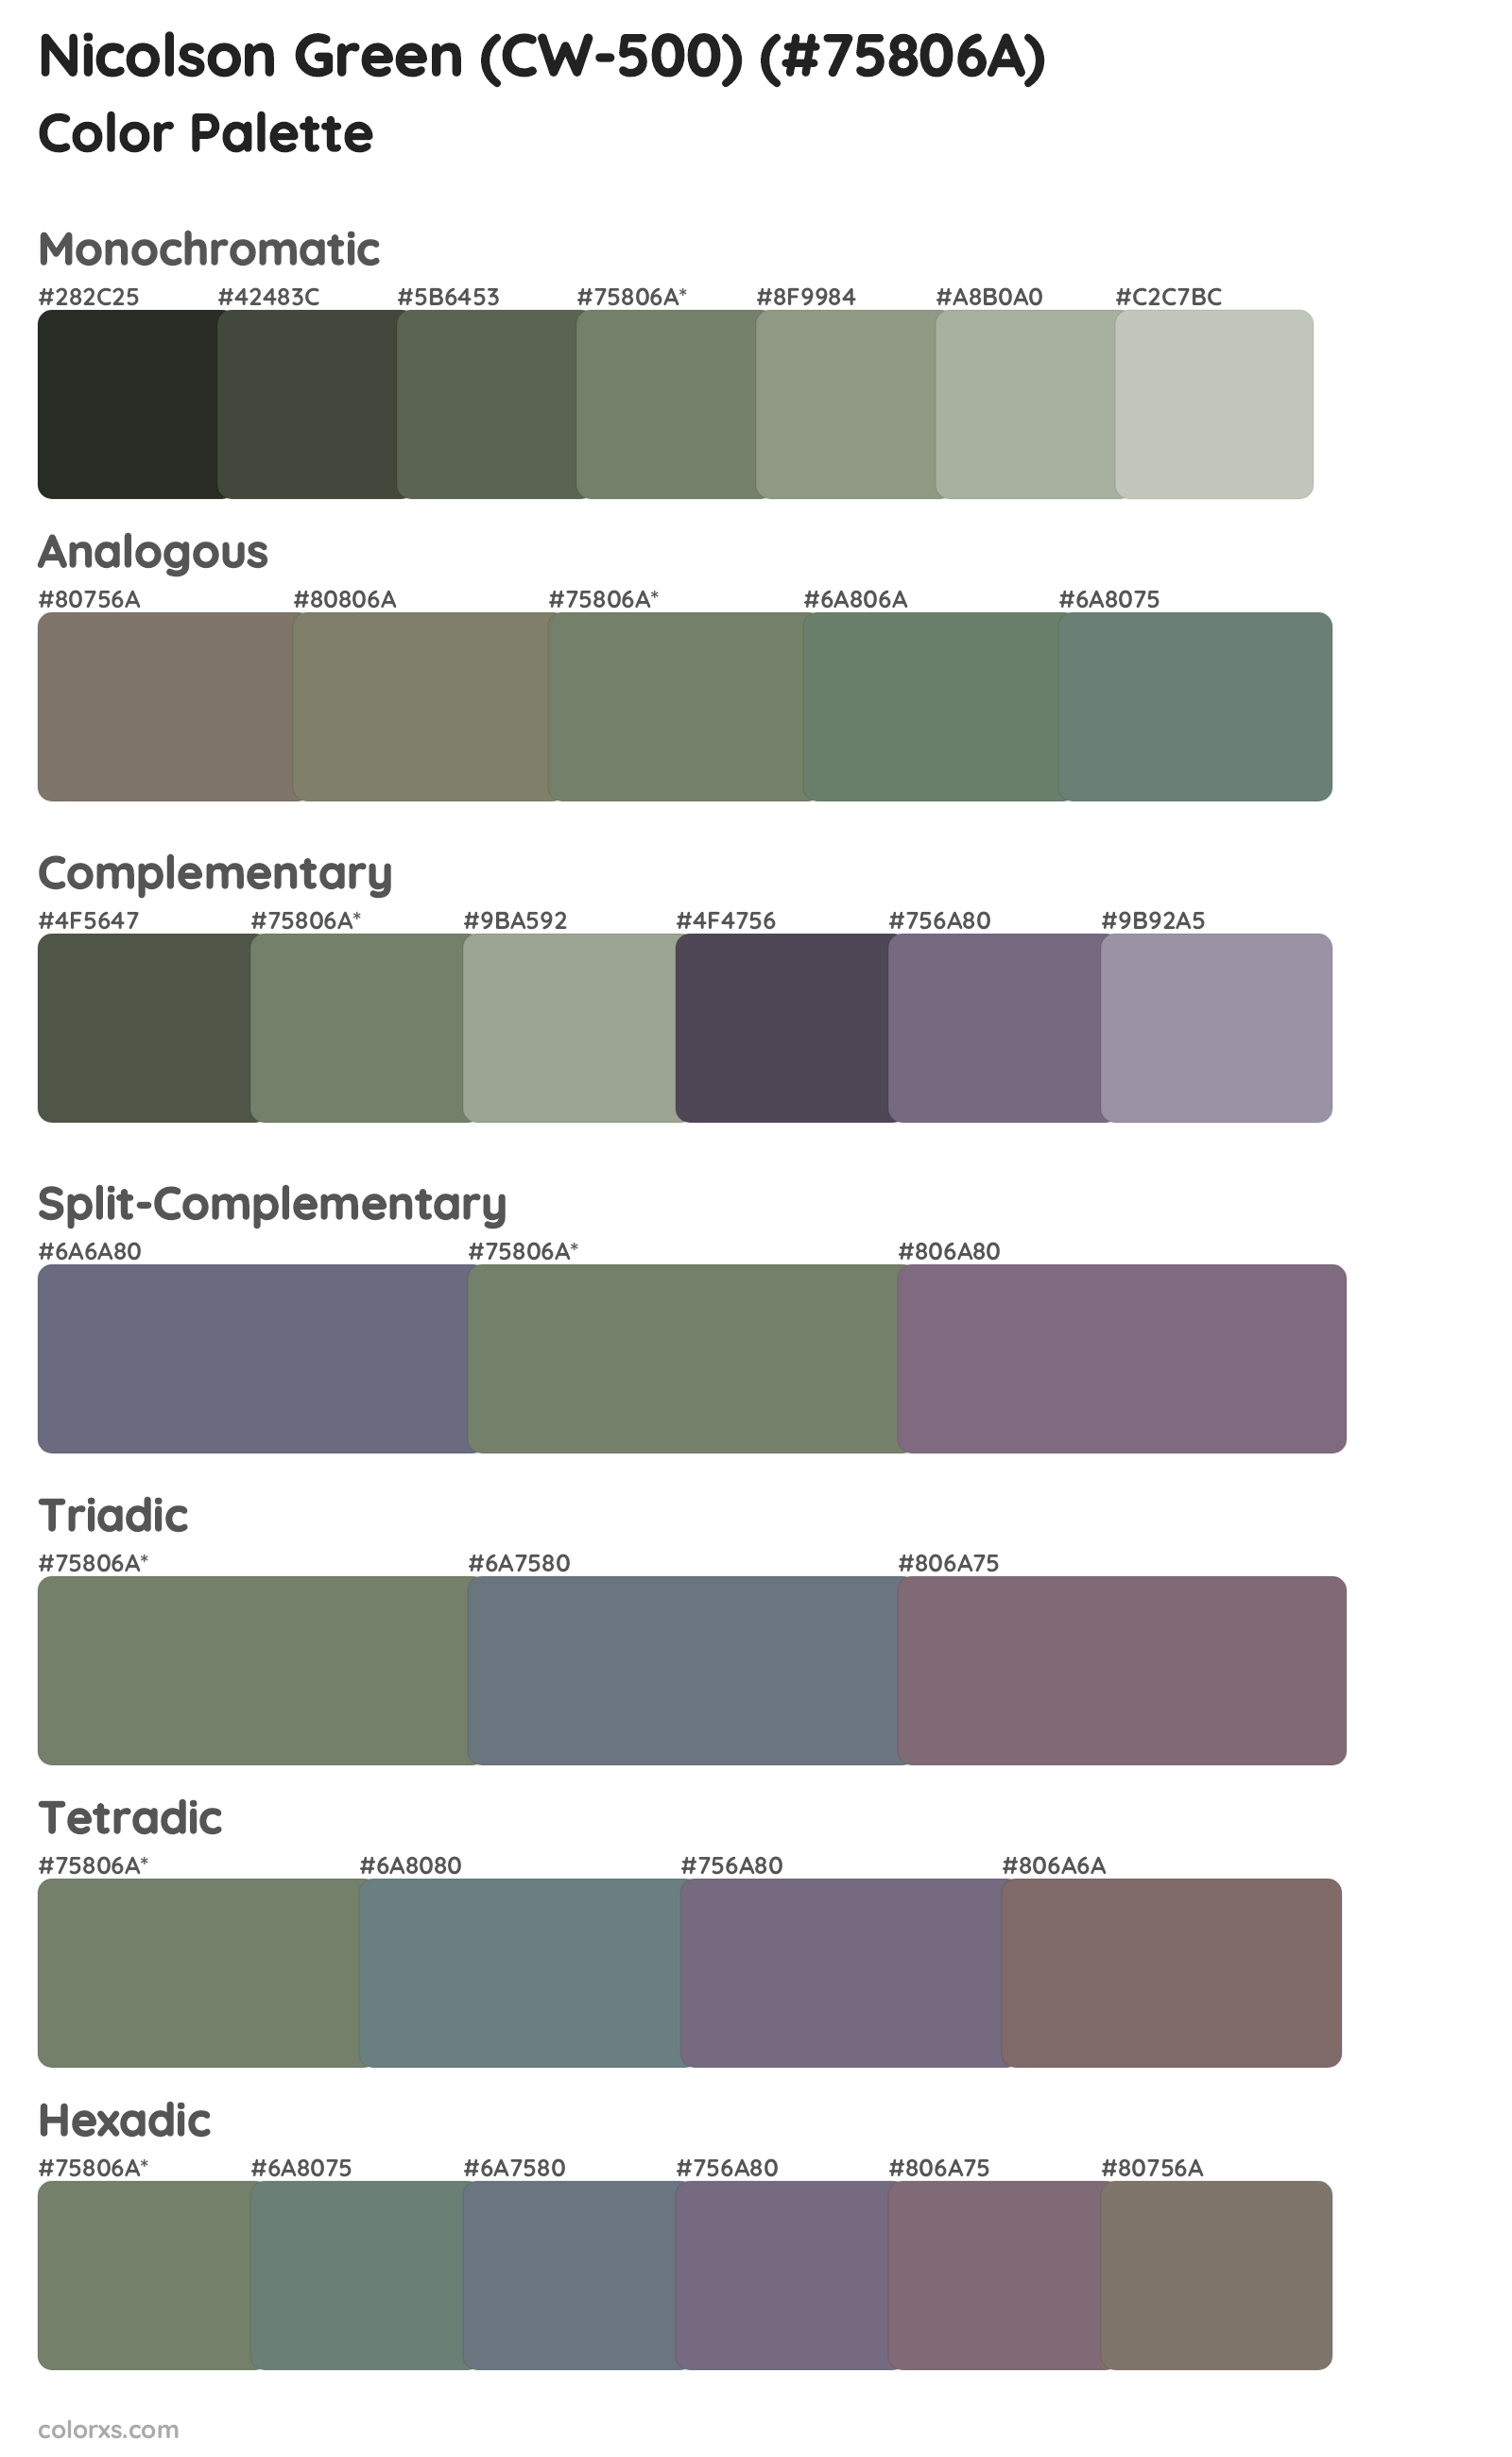 Nicolson Green (CW-500) Color Scheme Palettes